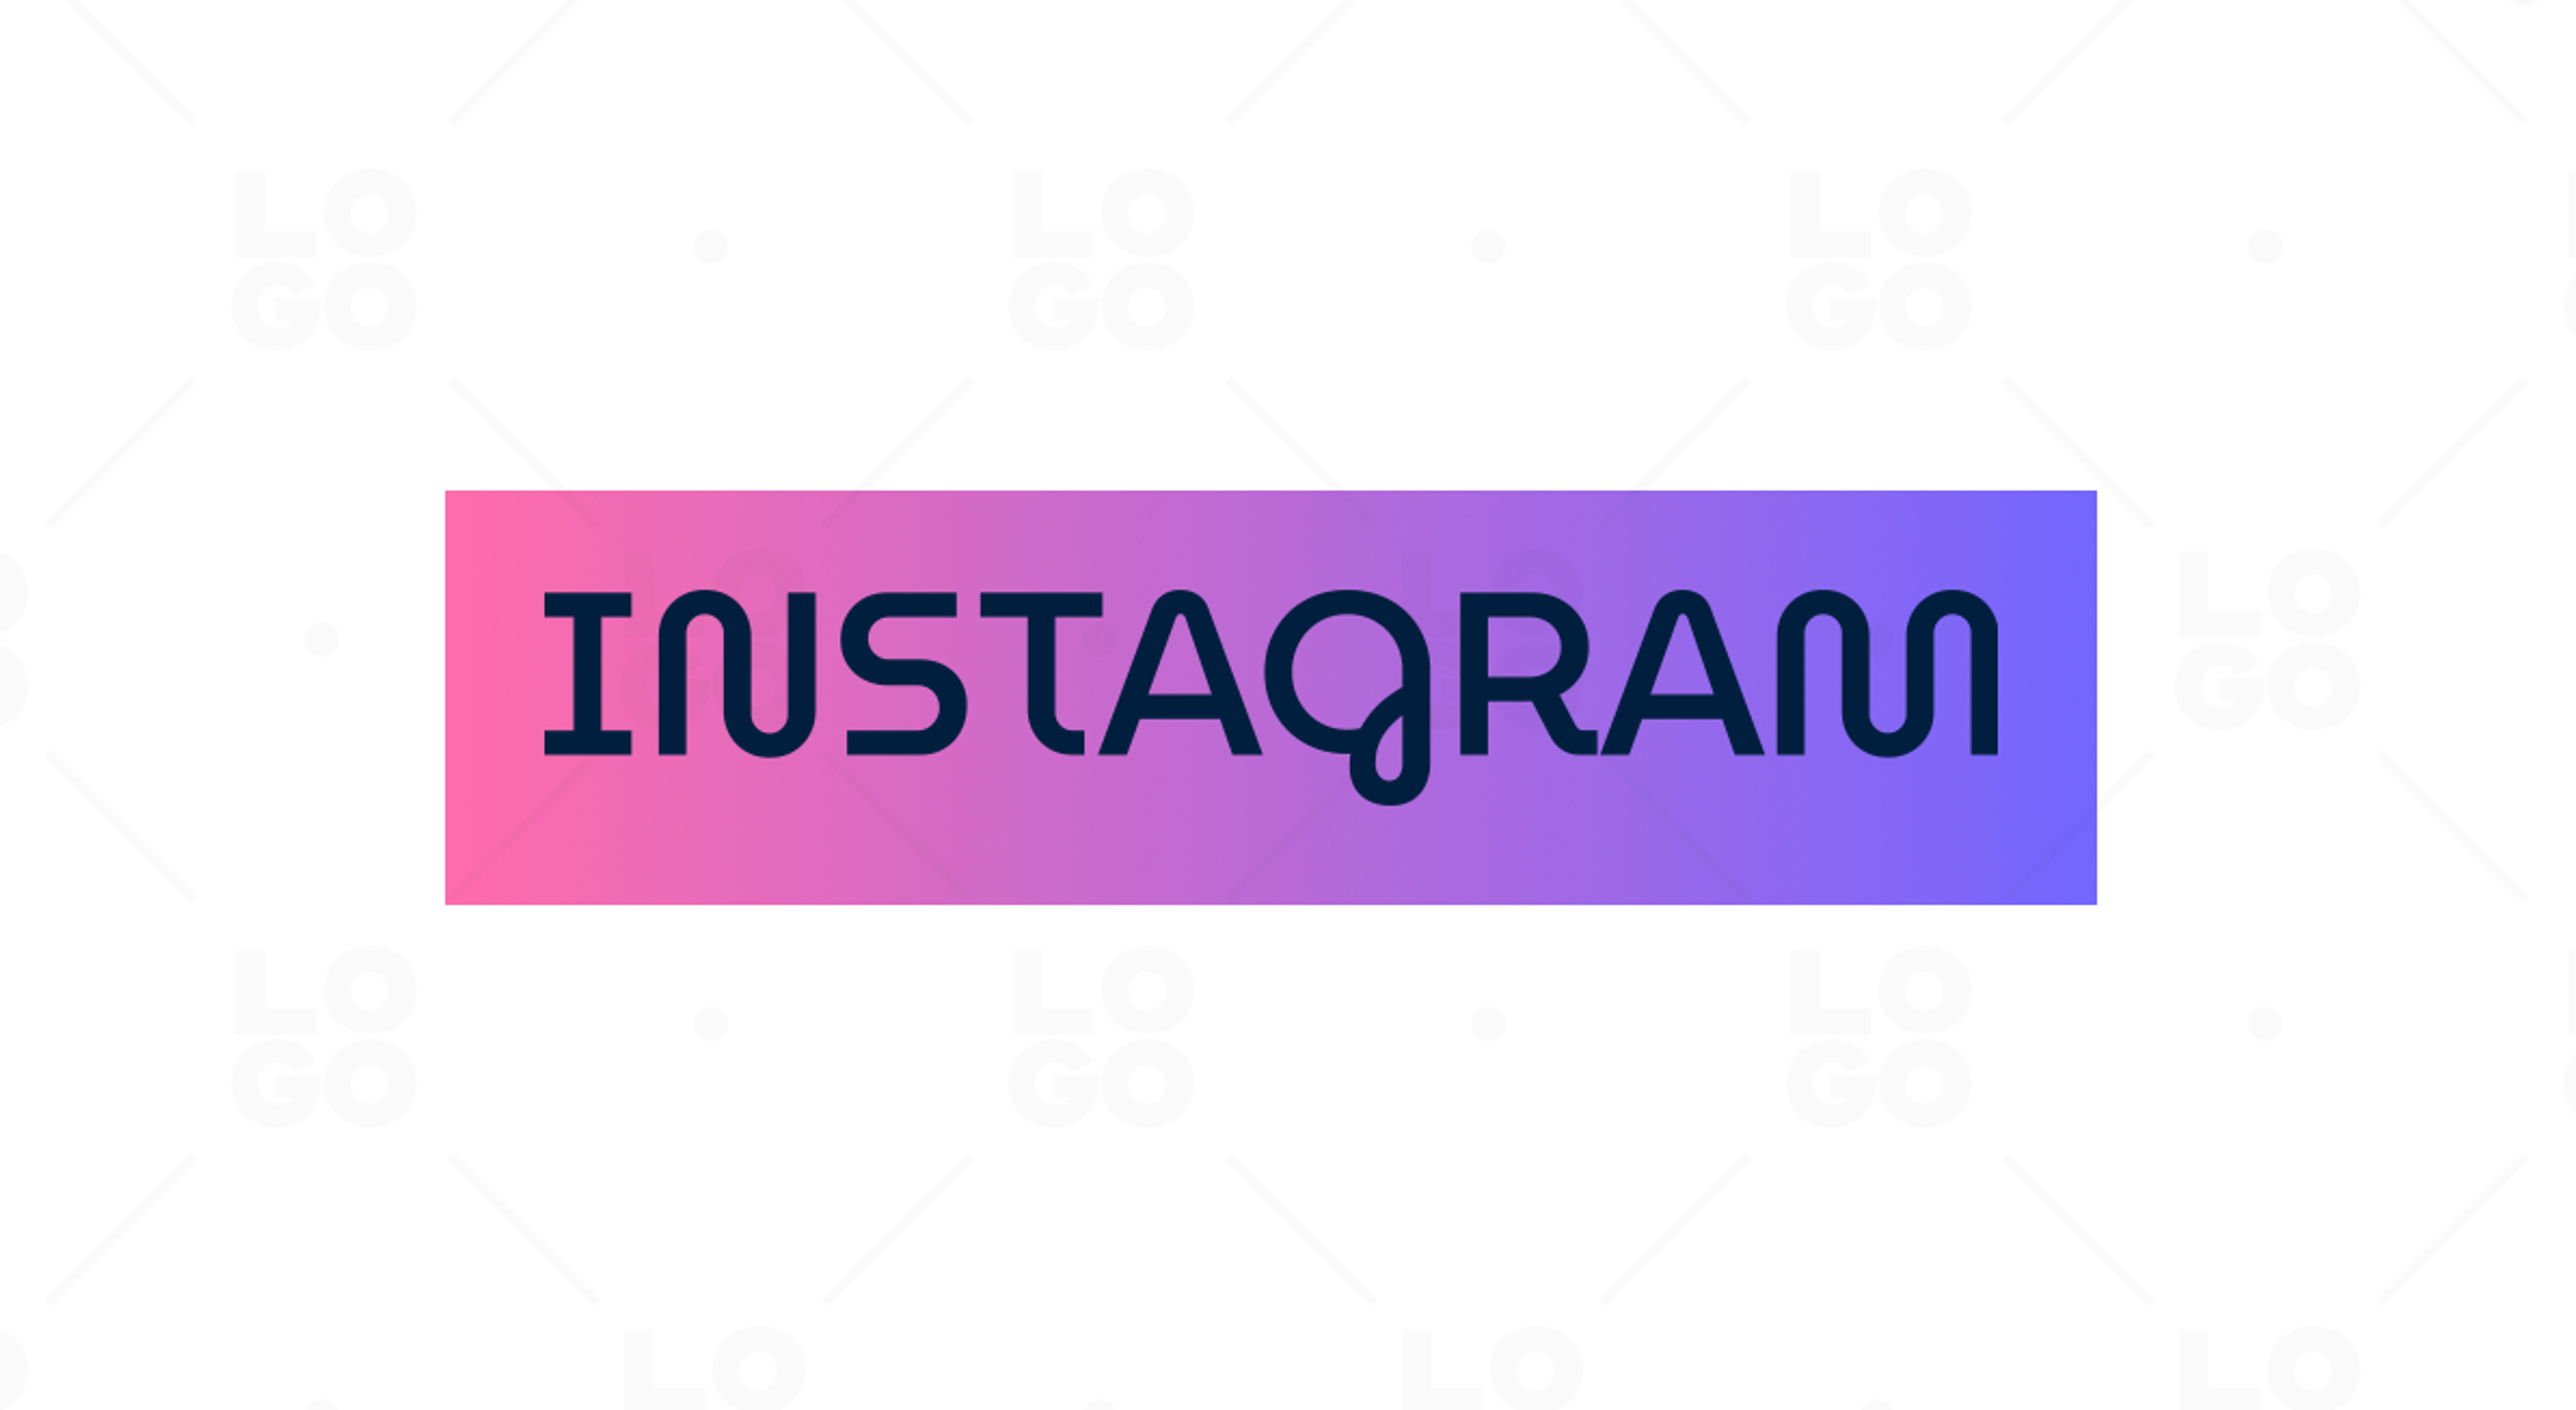 Instagram logo variation